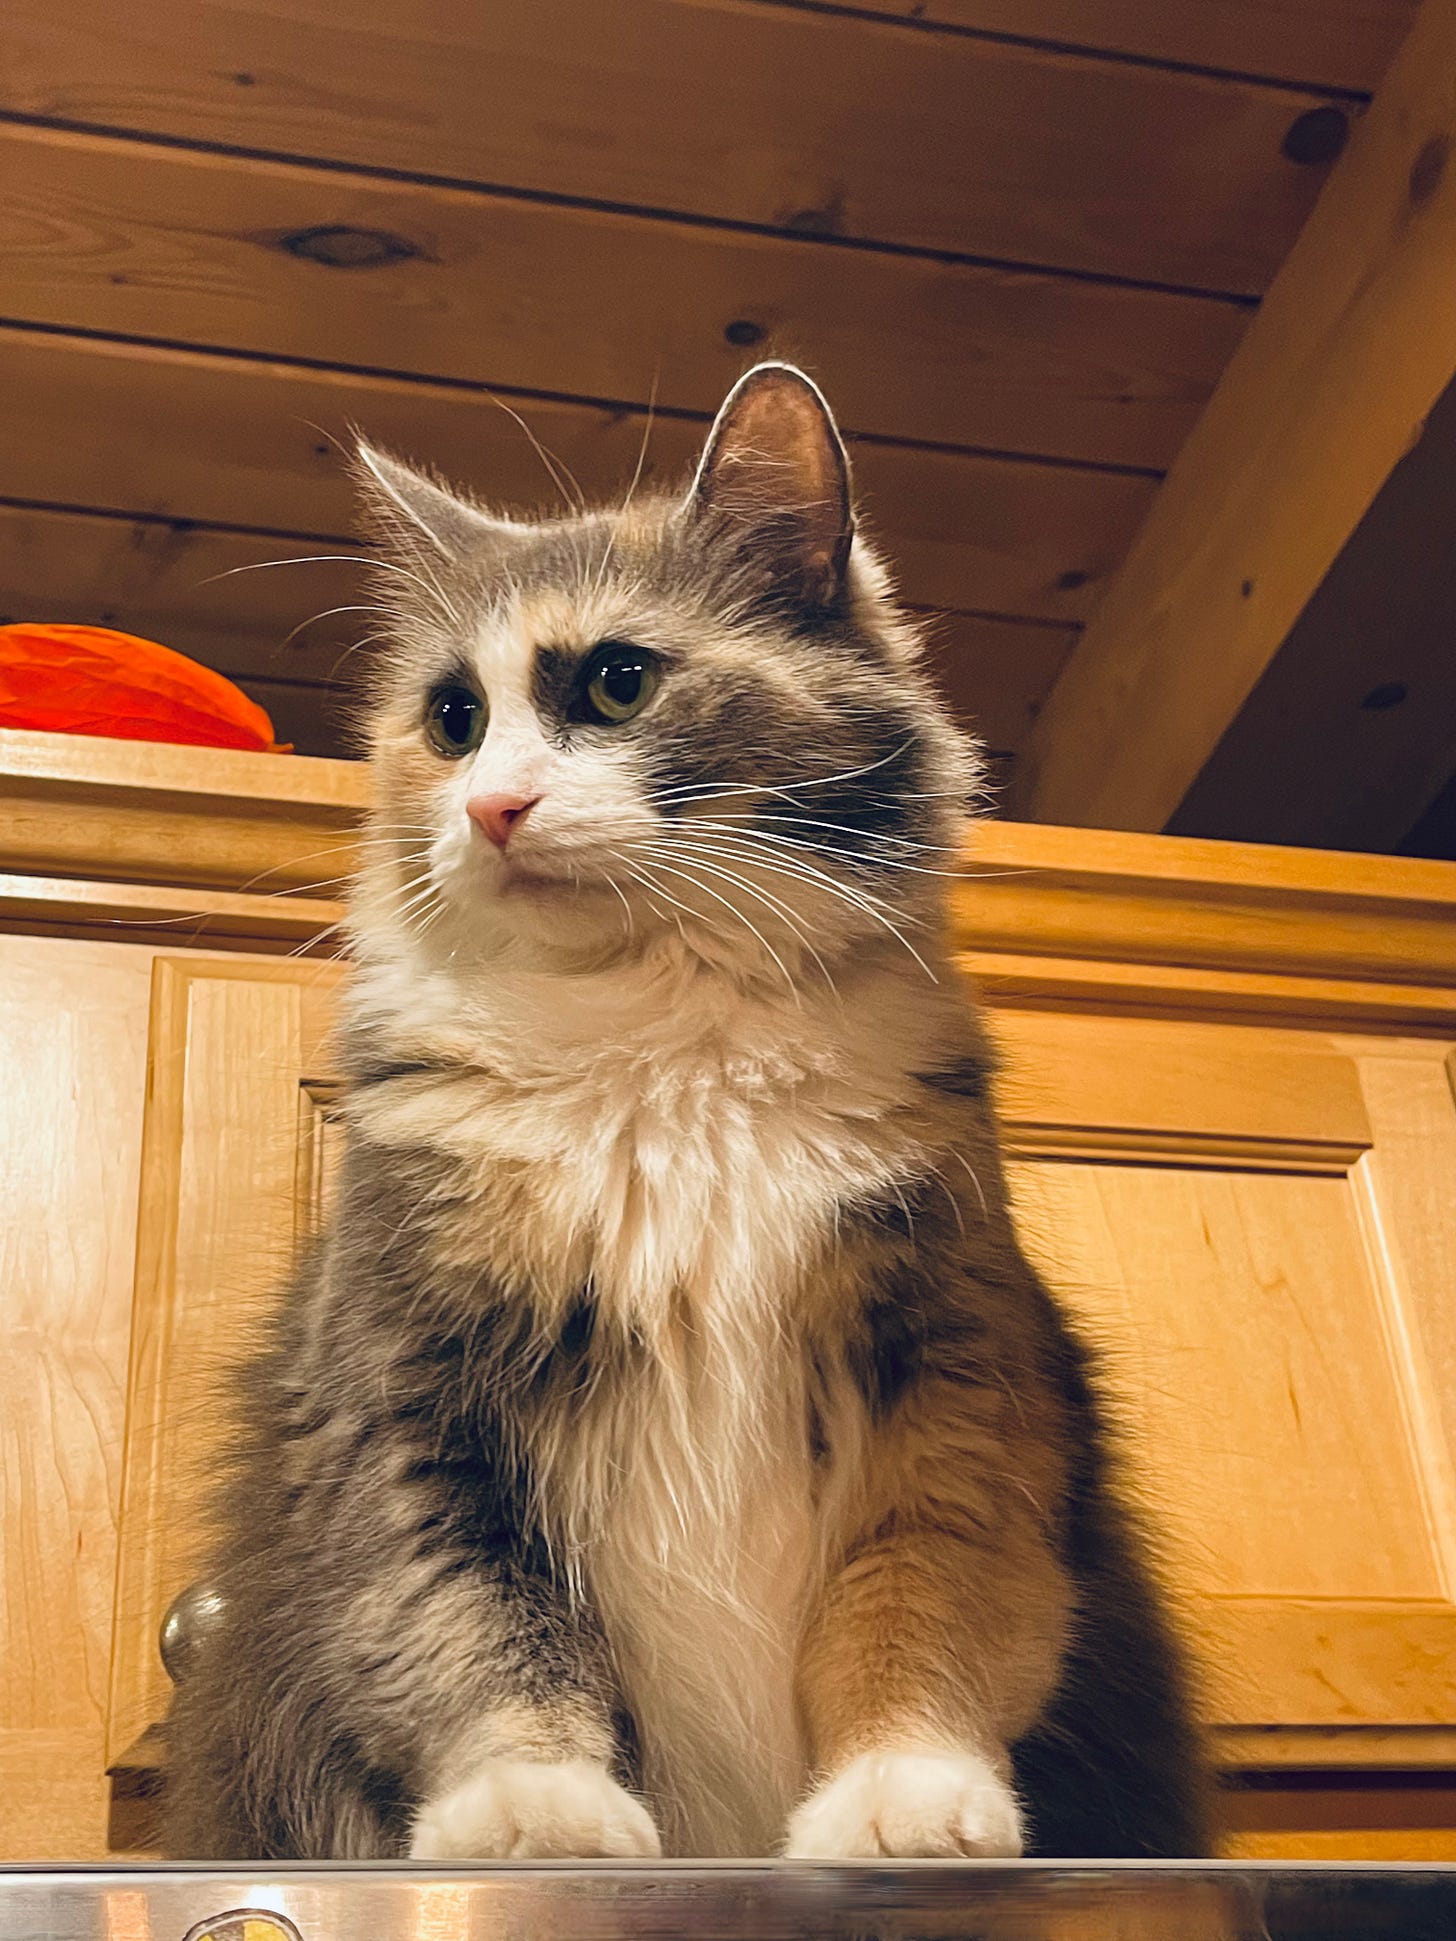 cat on a fridge looking around